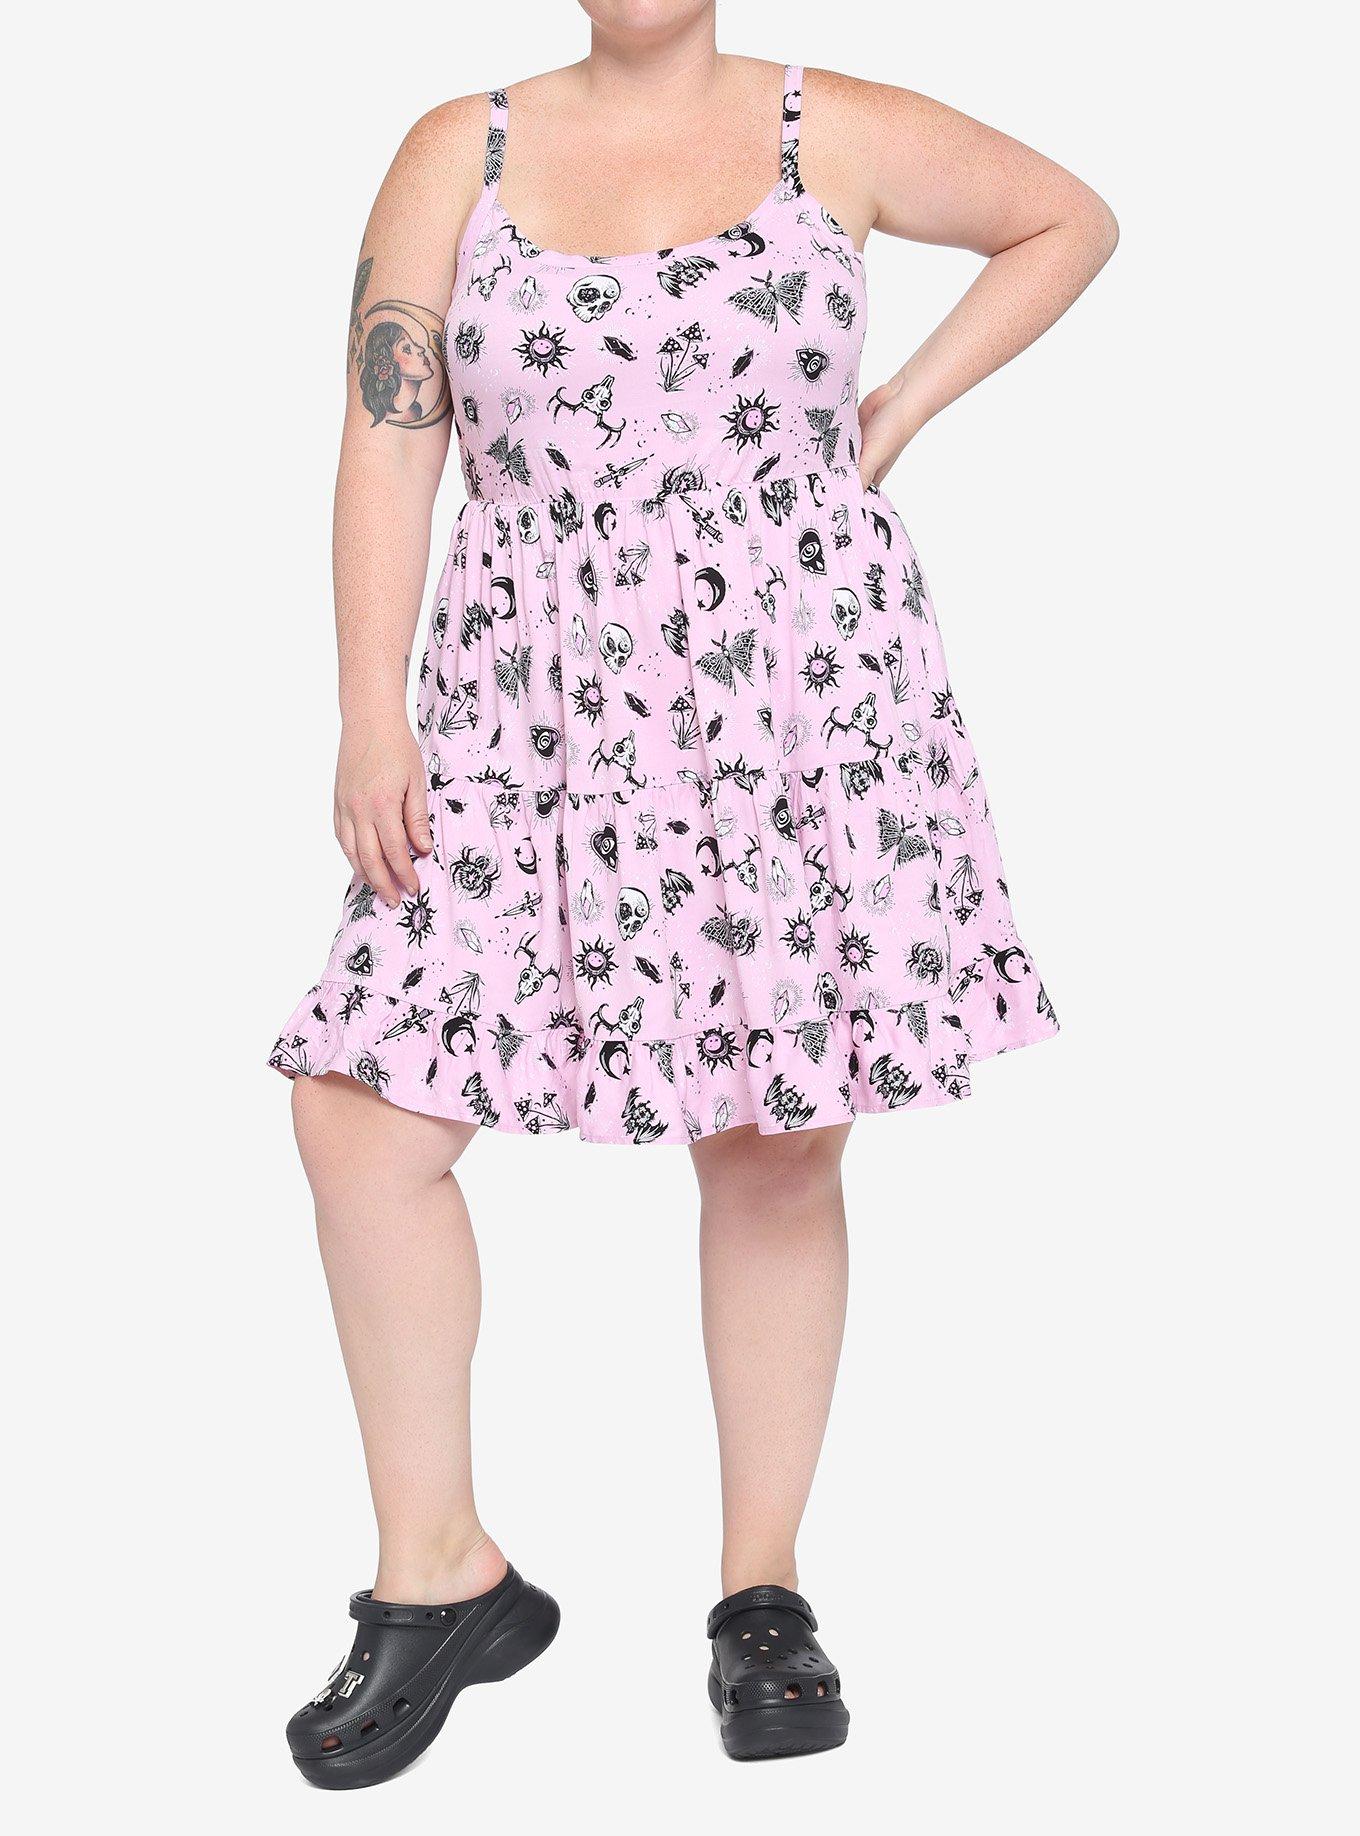 Pink Doodles Tiered Dress, PINK, alternate